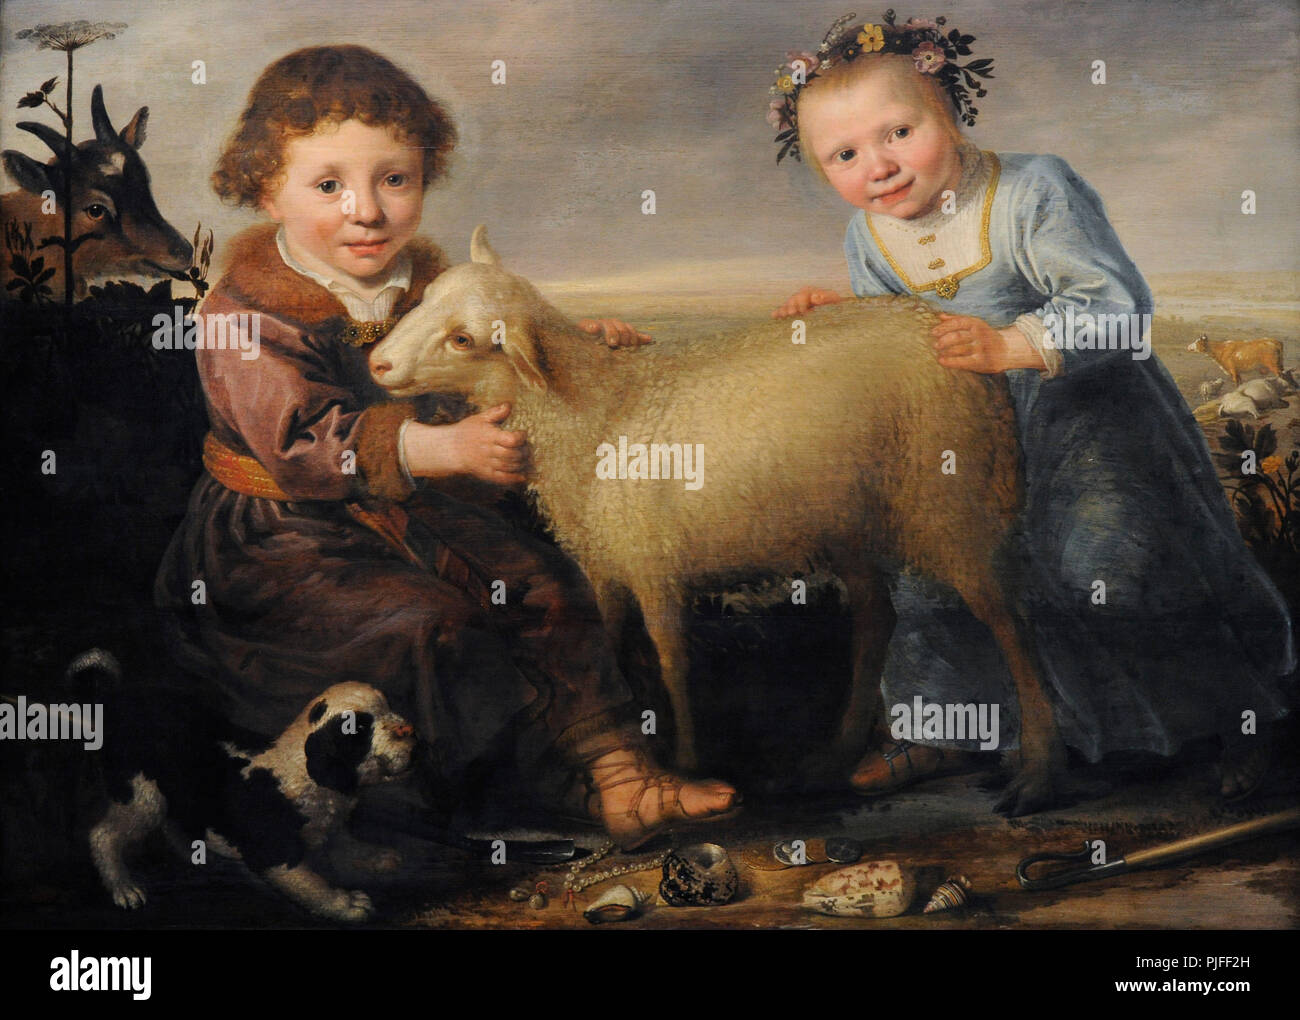 Jacob Gerritsz. Cuyp (1594-1651/1652). Pittore olandese. Due bambini con un agnello. Wallraf-Richartz Museum. Colonia. Germania. Foto Stock